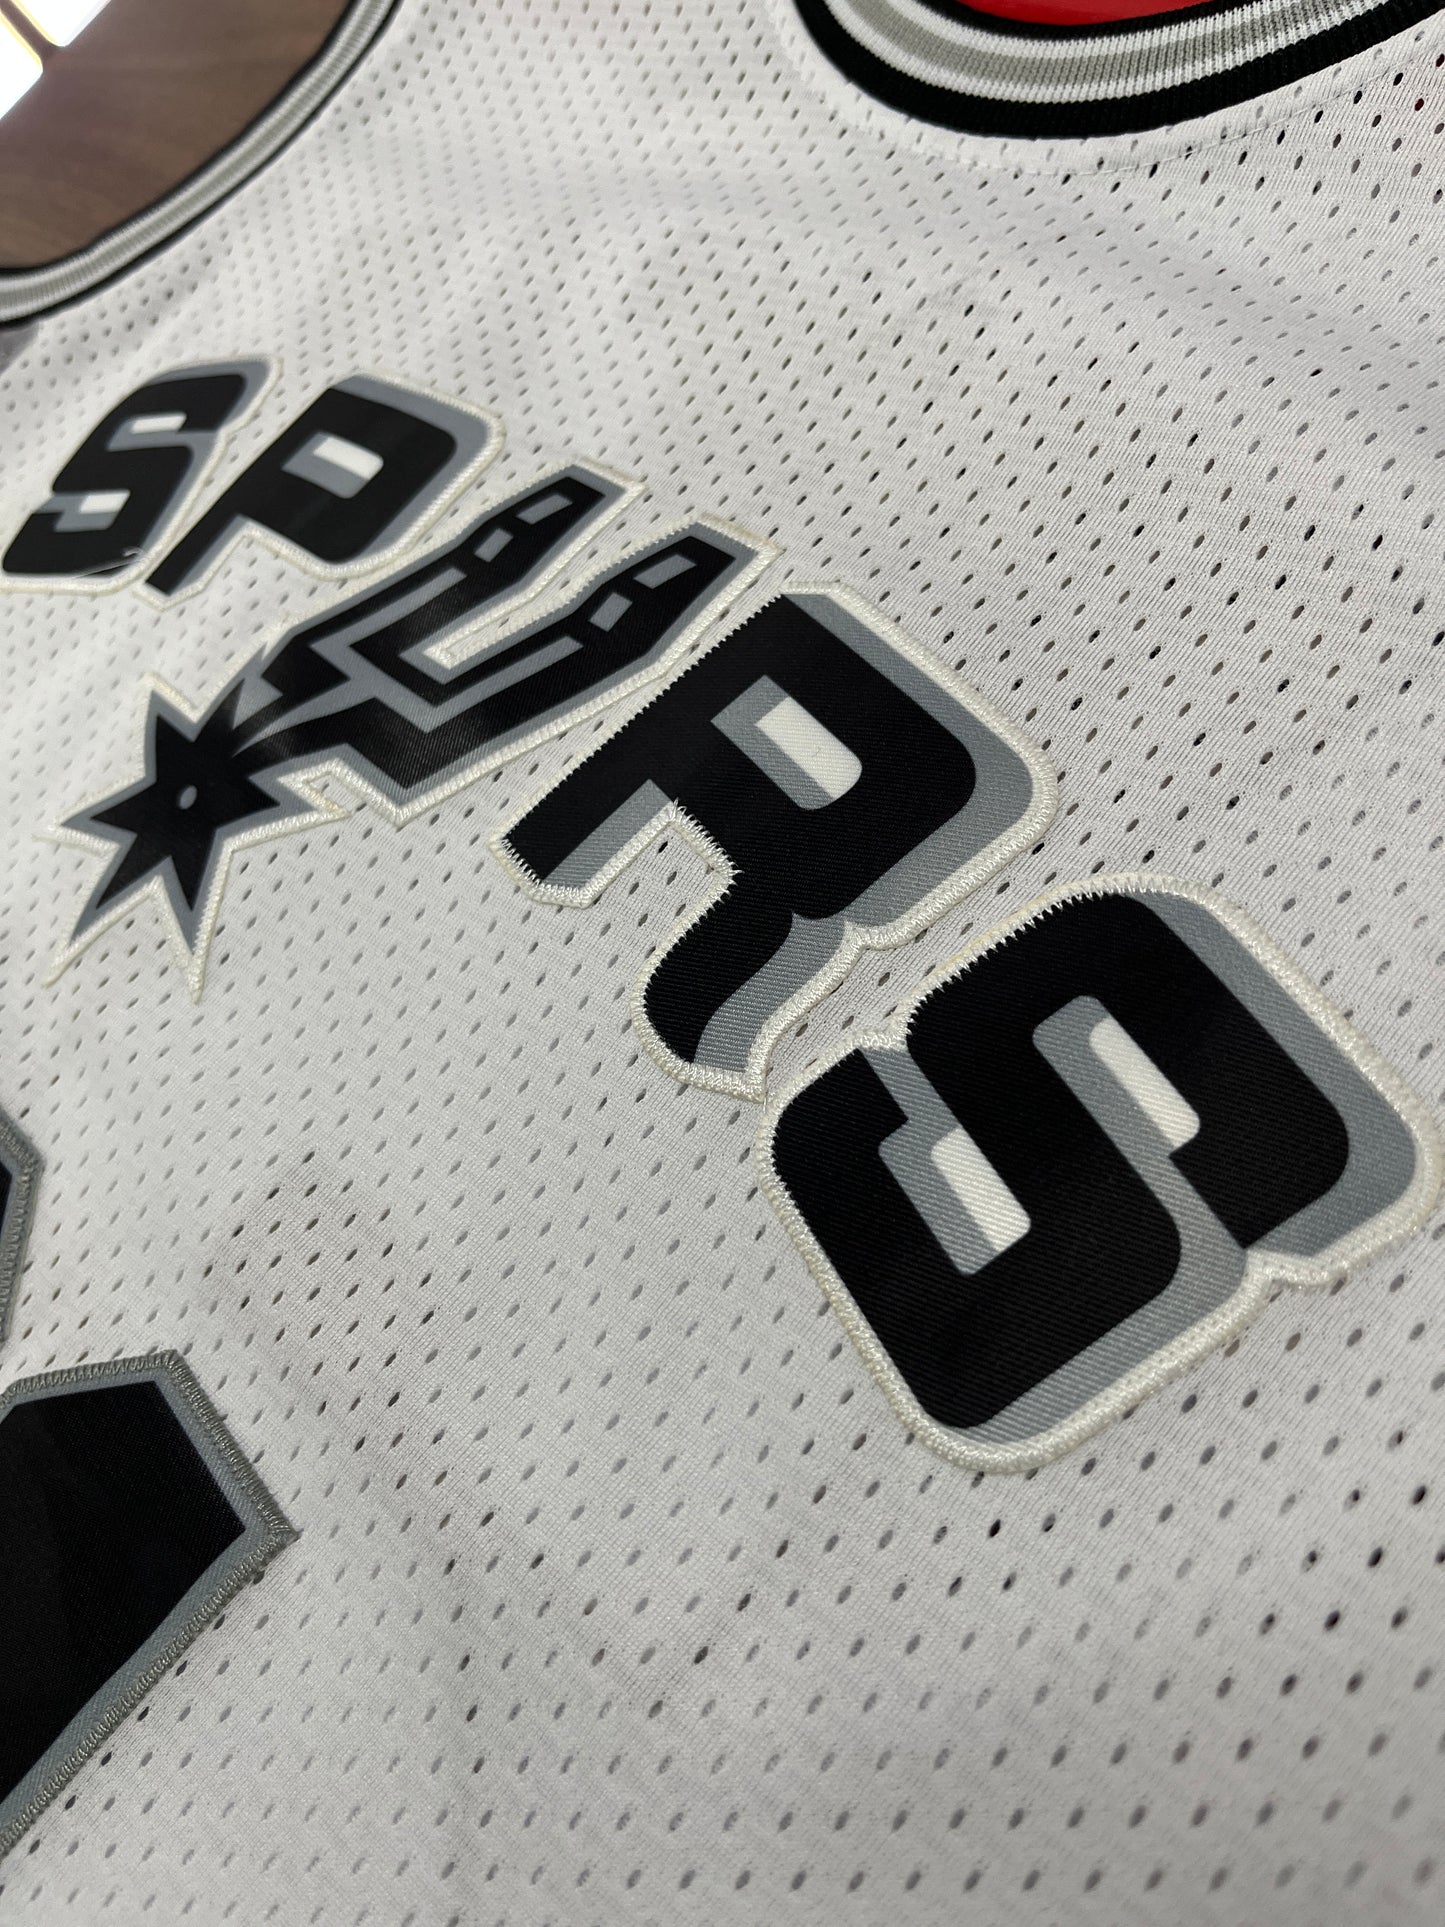 DUNCAN 21 White  San Antonio Spurs NBA Jersey